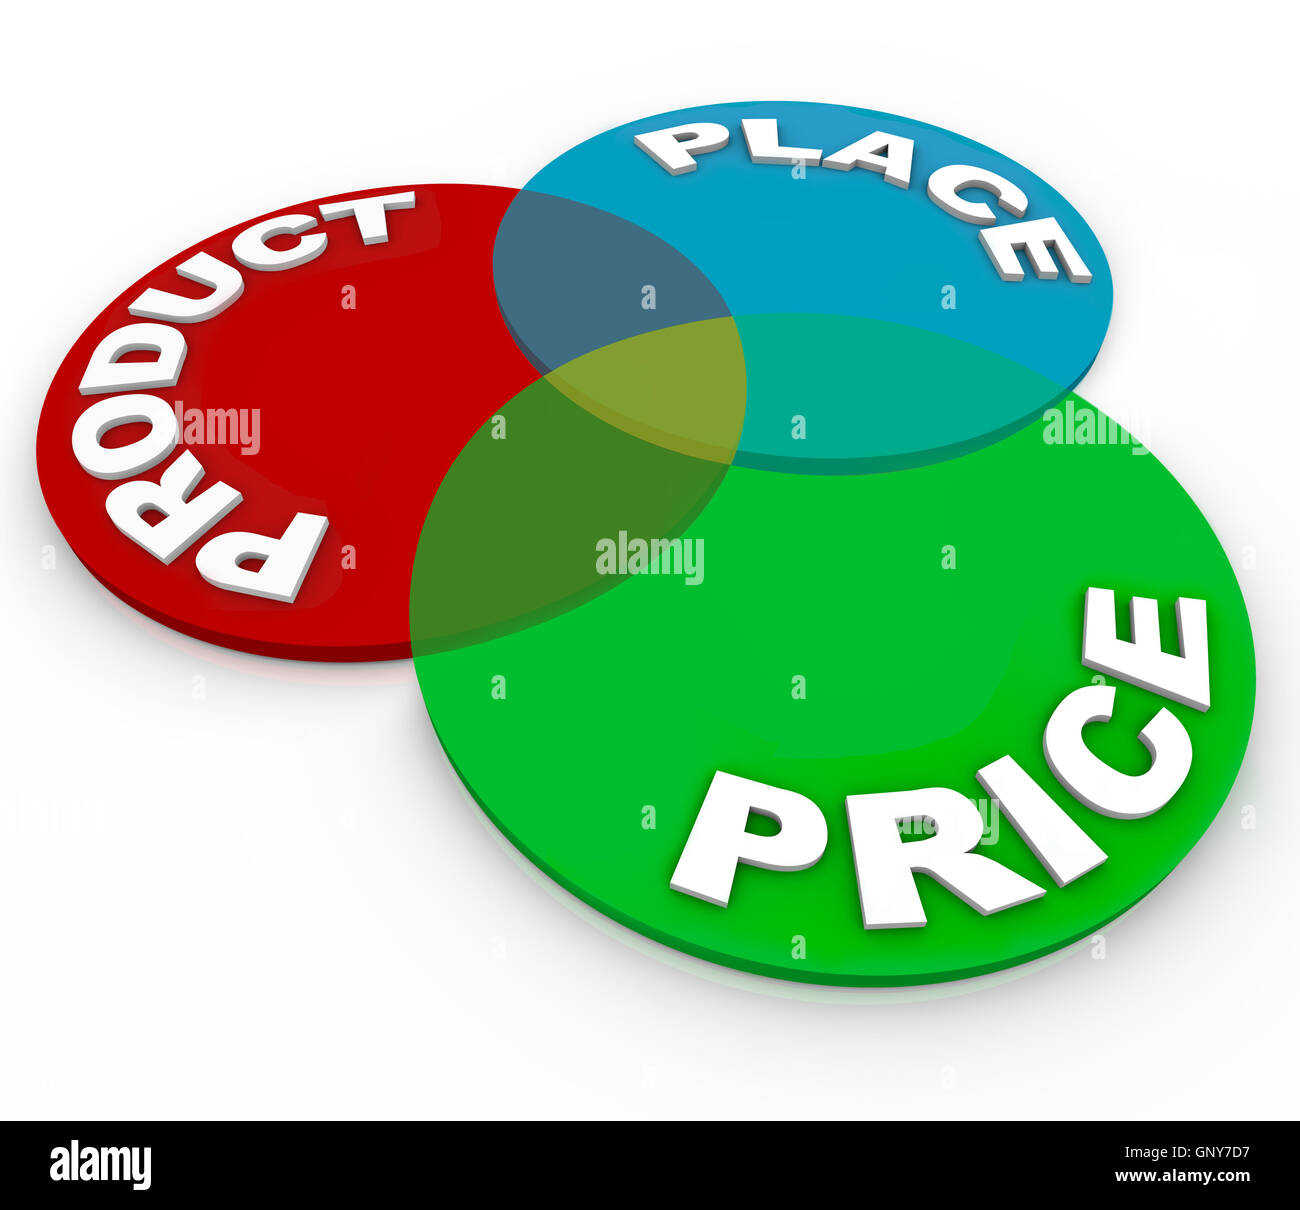 Produktpreis statt Marketing-Prinzipien Venn-Diagramm Stockfoto